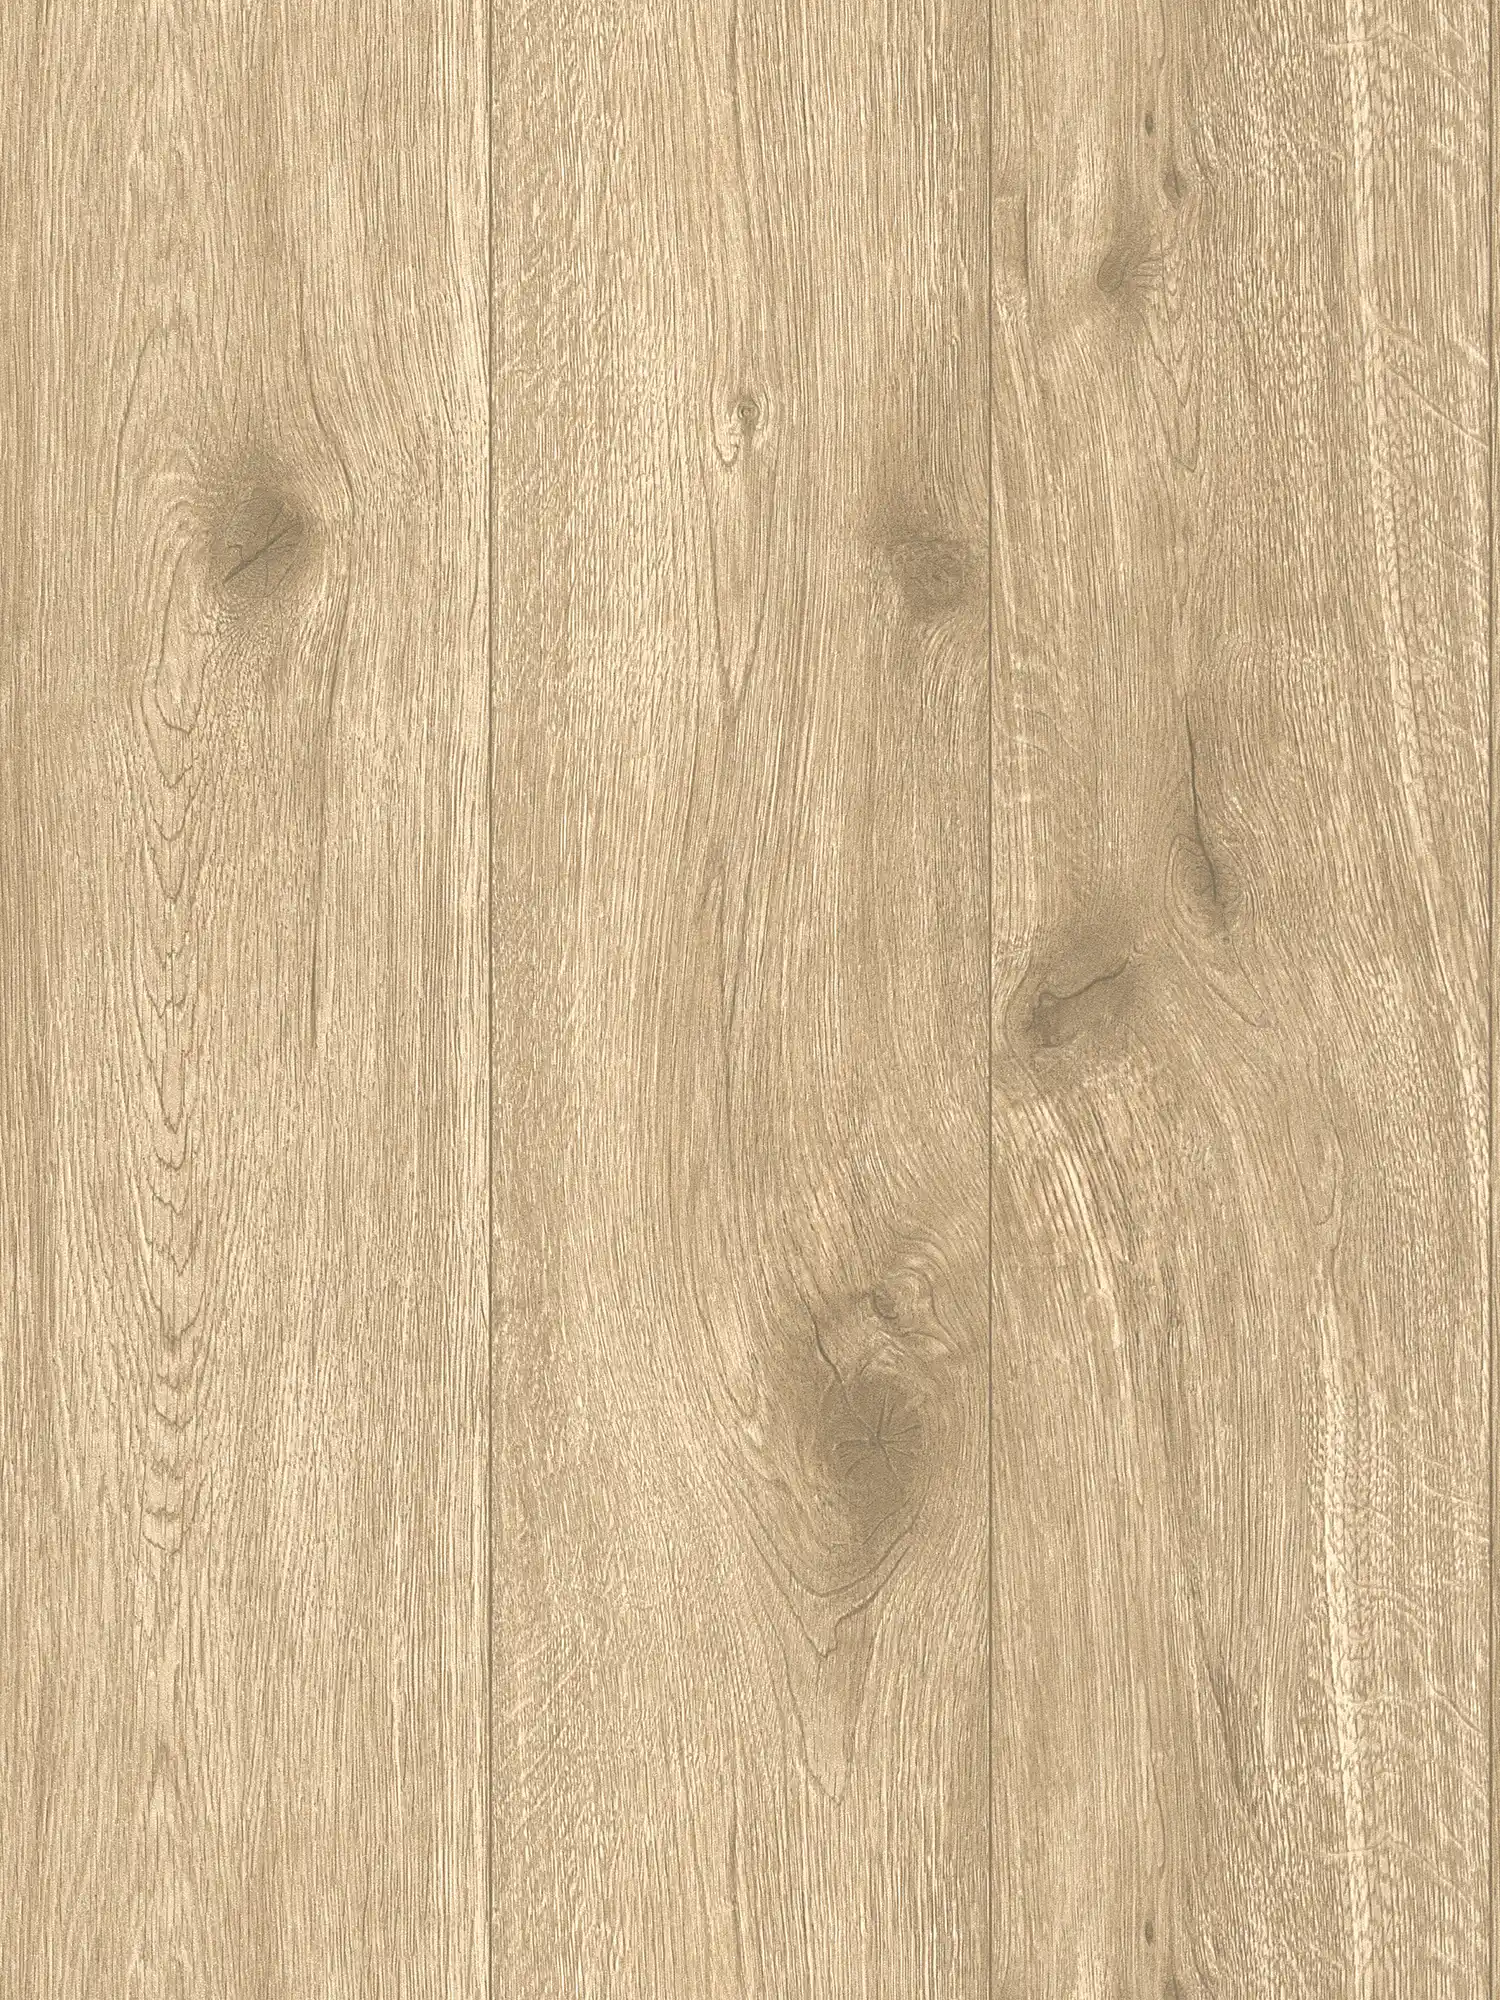         Light brown wallpaper wood look with grain - brown, beige
    